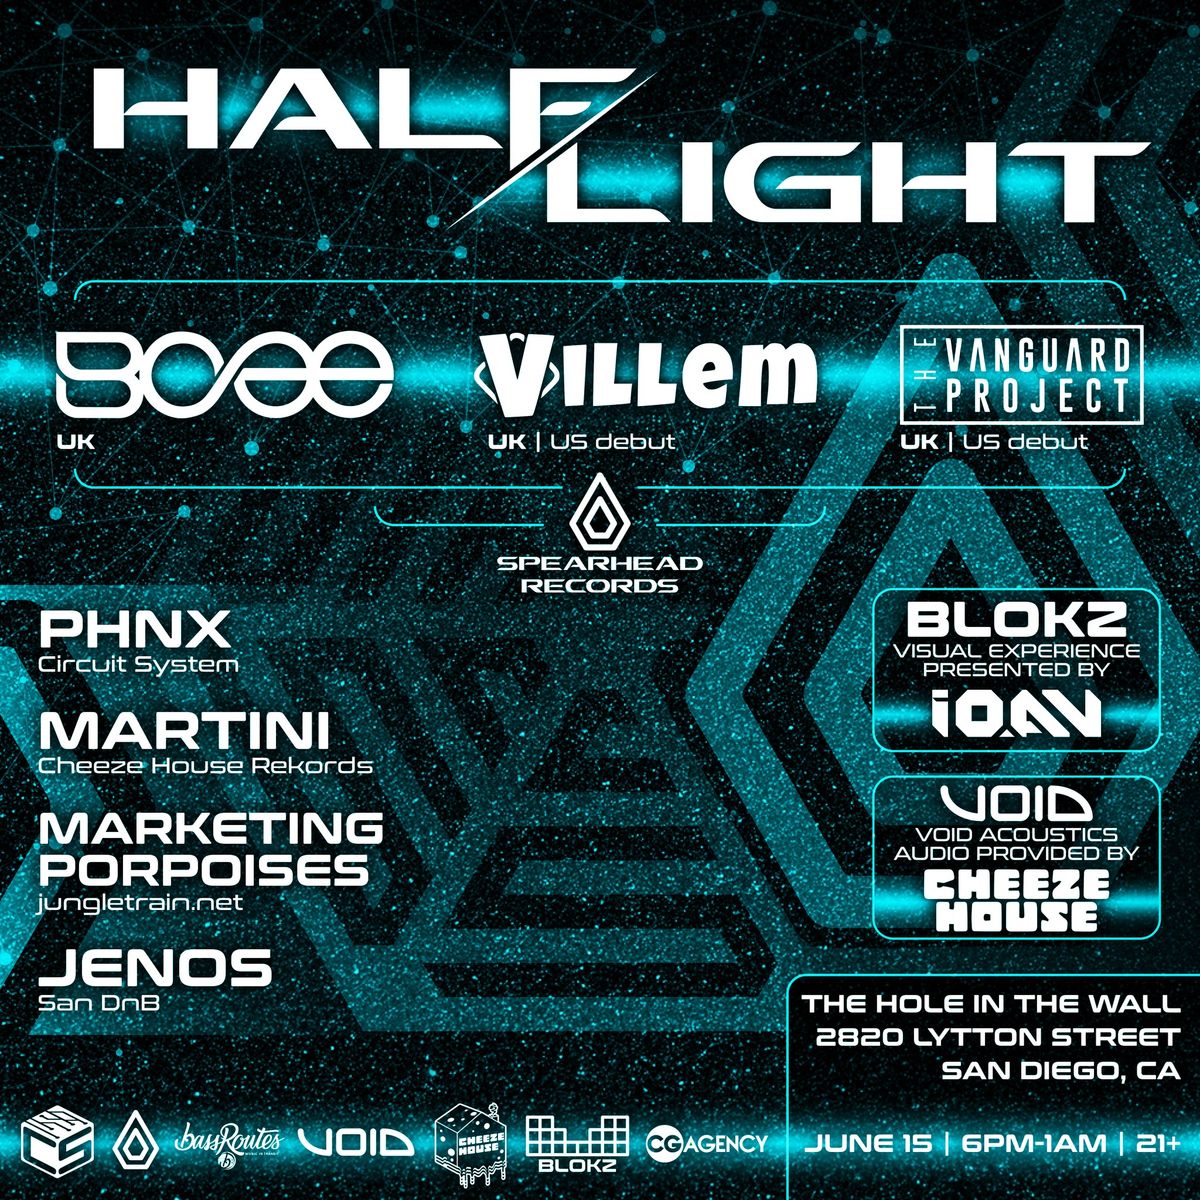 HALF\/LIGHT [BCee, Villem, The Vanguard Project]